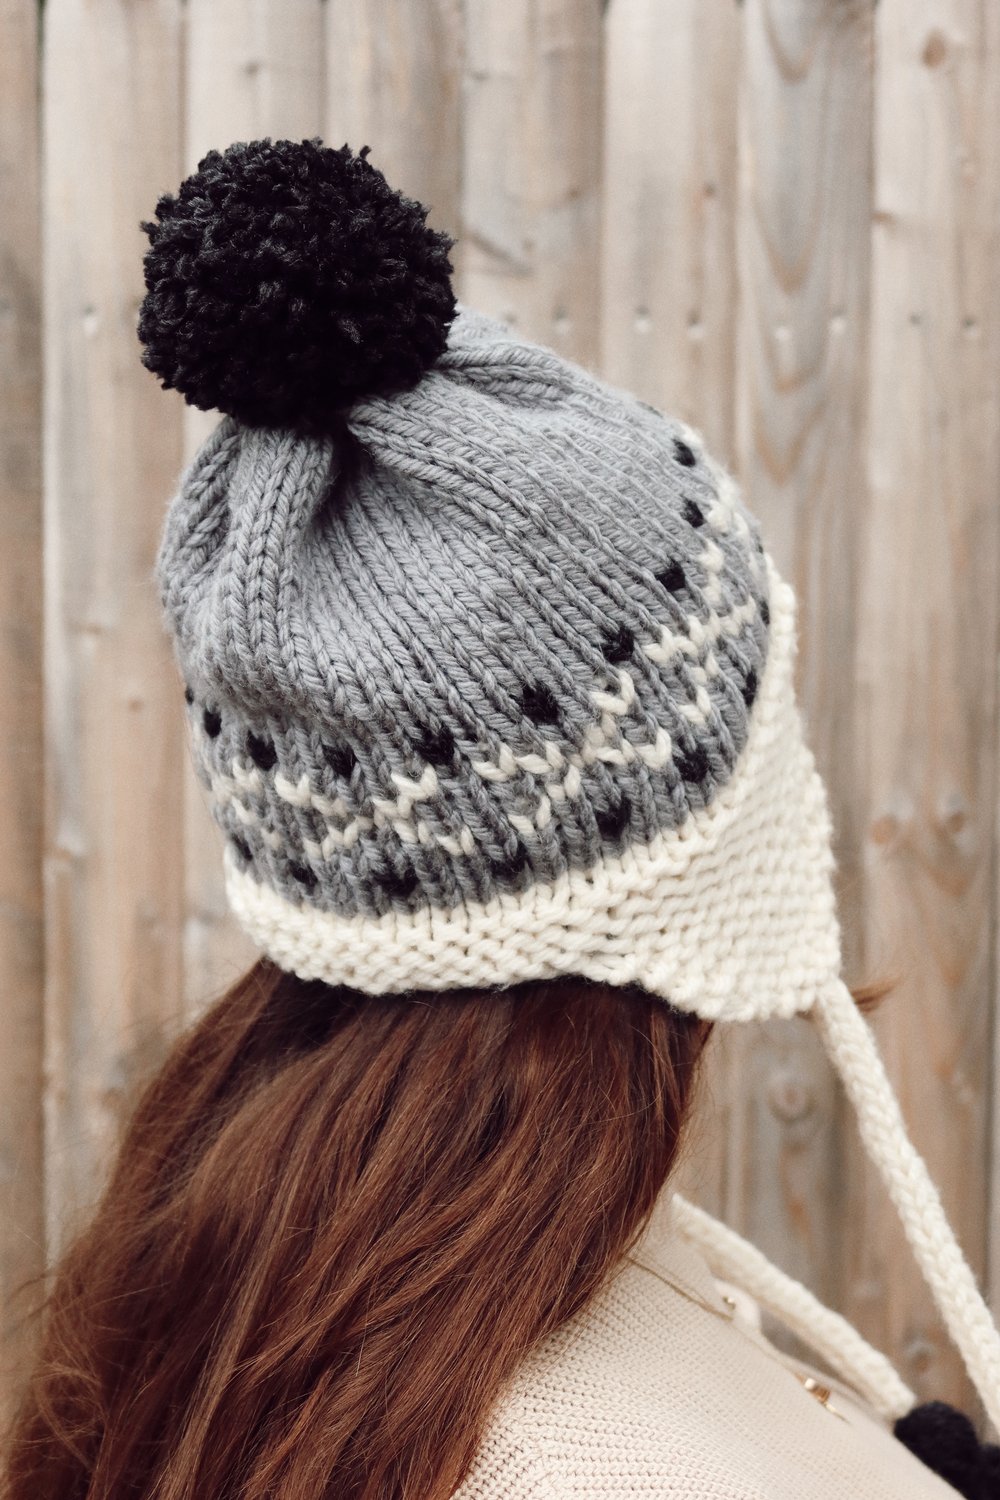 Annie Bucket Hat FREE Crochet Pattern — Two of Wands